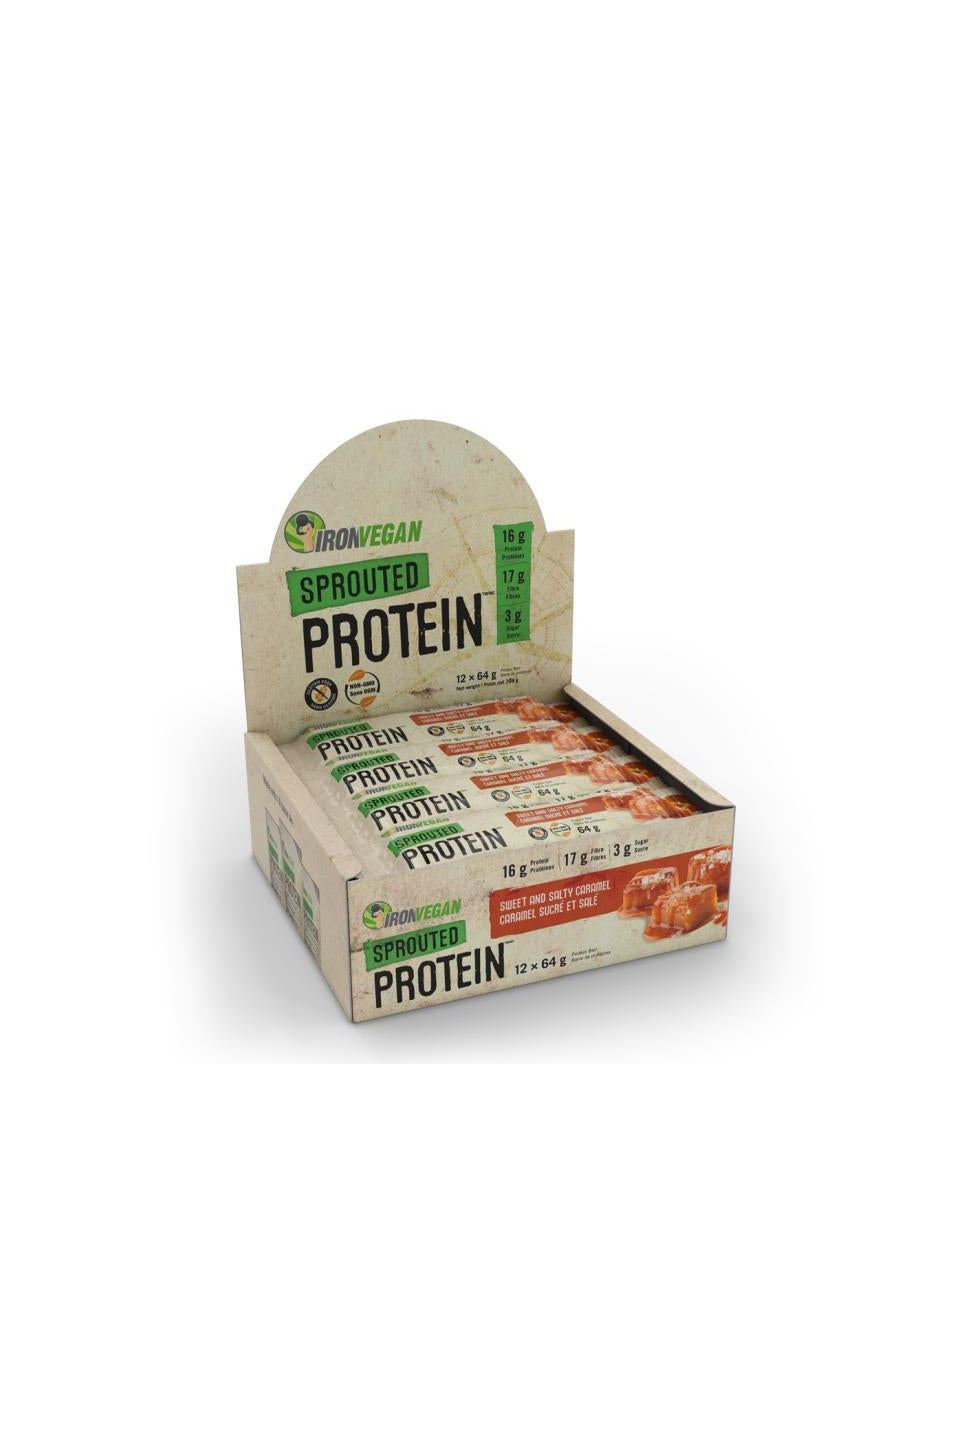 Iron Vegan Sweet & Salty Caramel Sprouted Protein Bar 64g Case 12